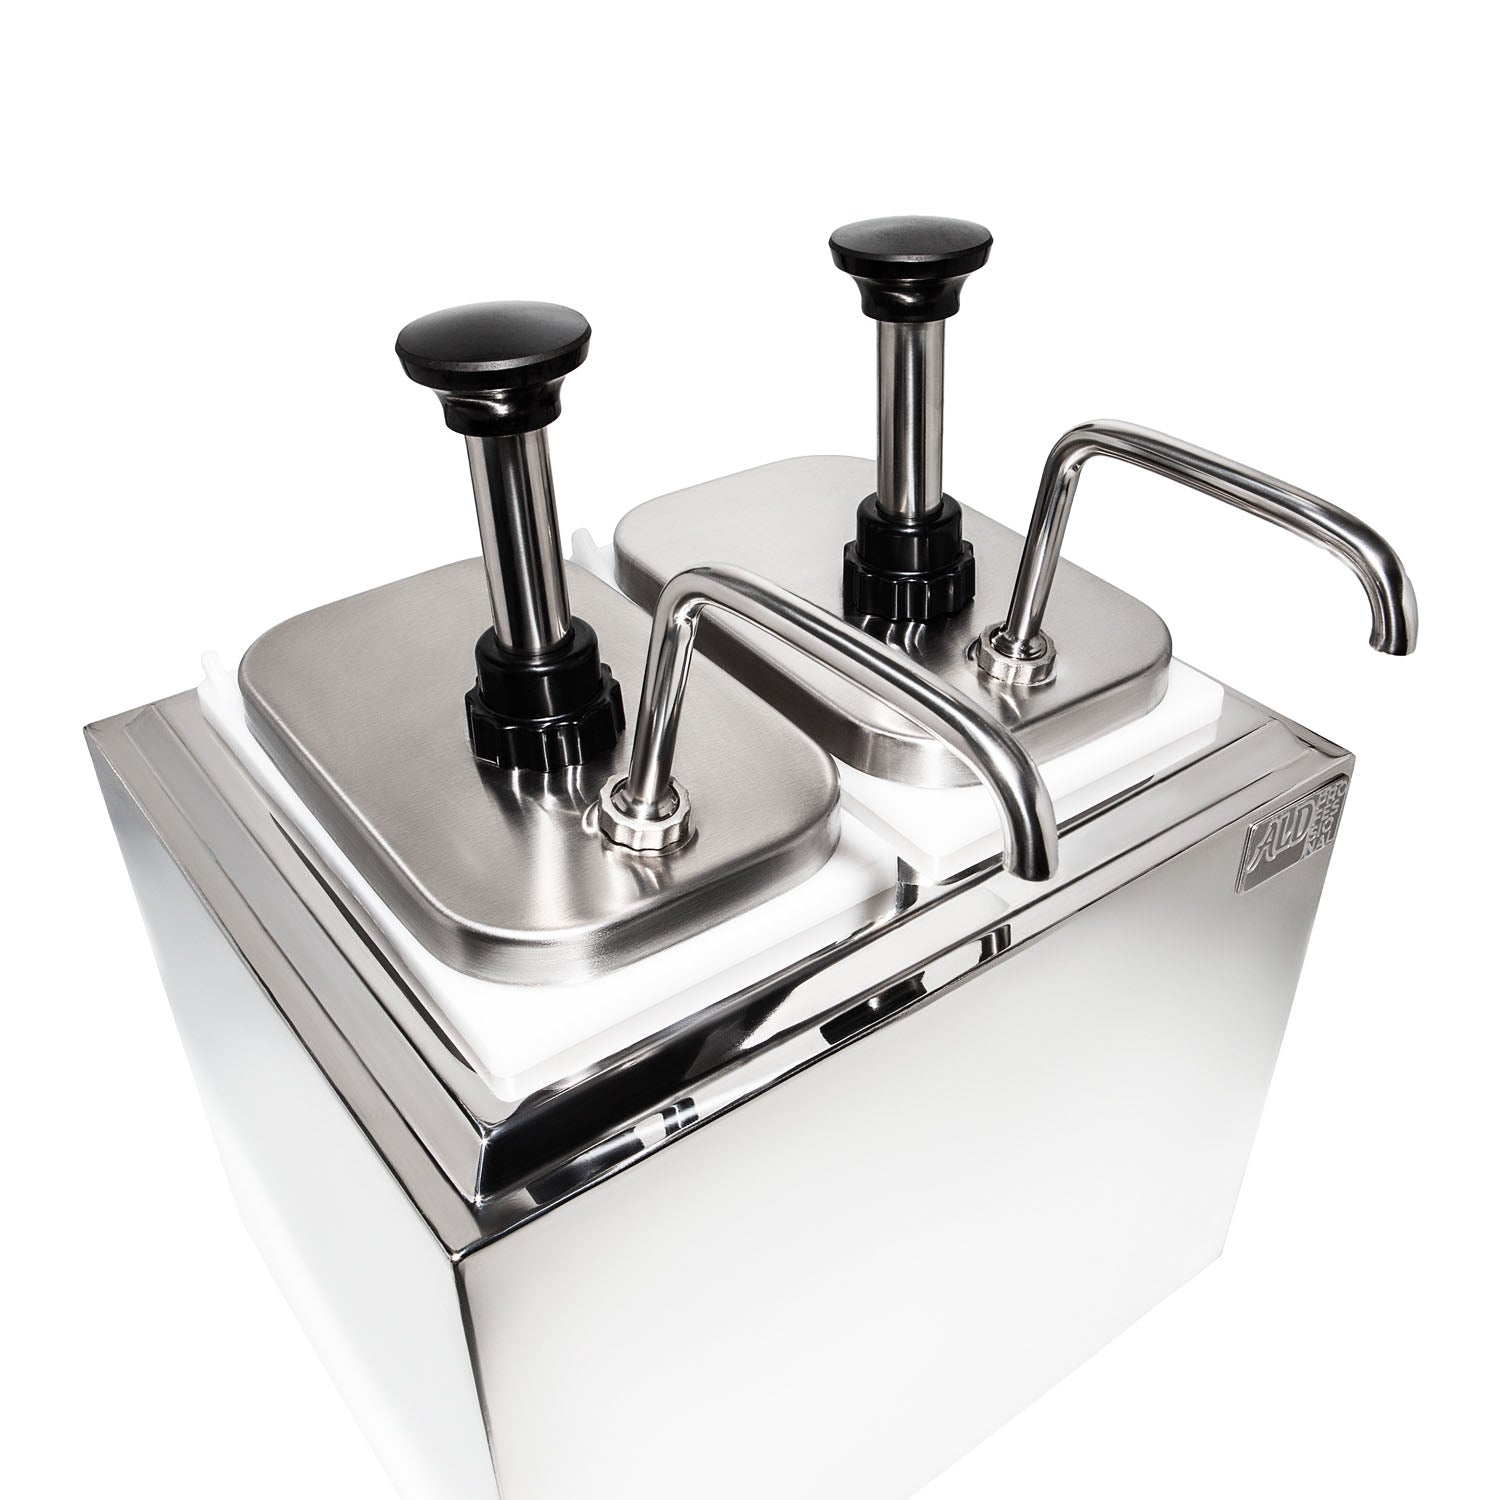 AP-315S Sauce Dispenser | 2-Bucket Sauce Pressure Pump | Double Sauce Dispenser | Commercial and Home Use